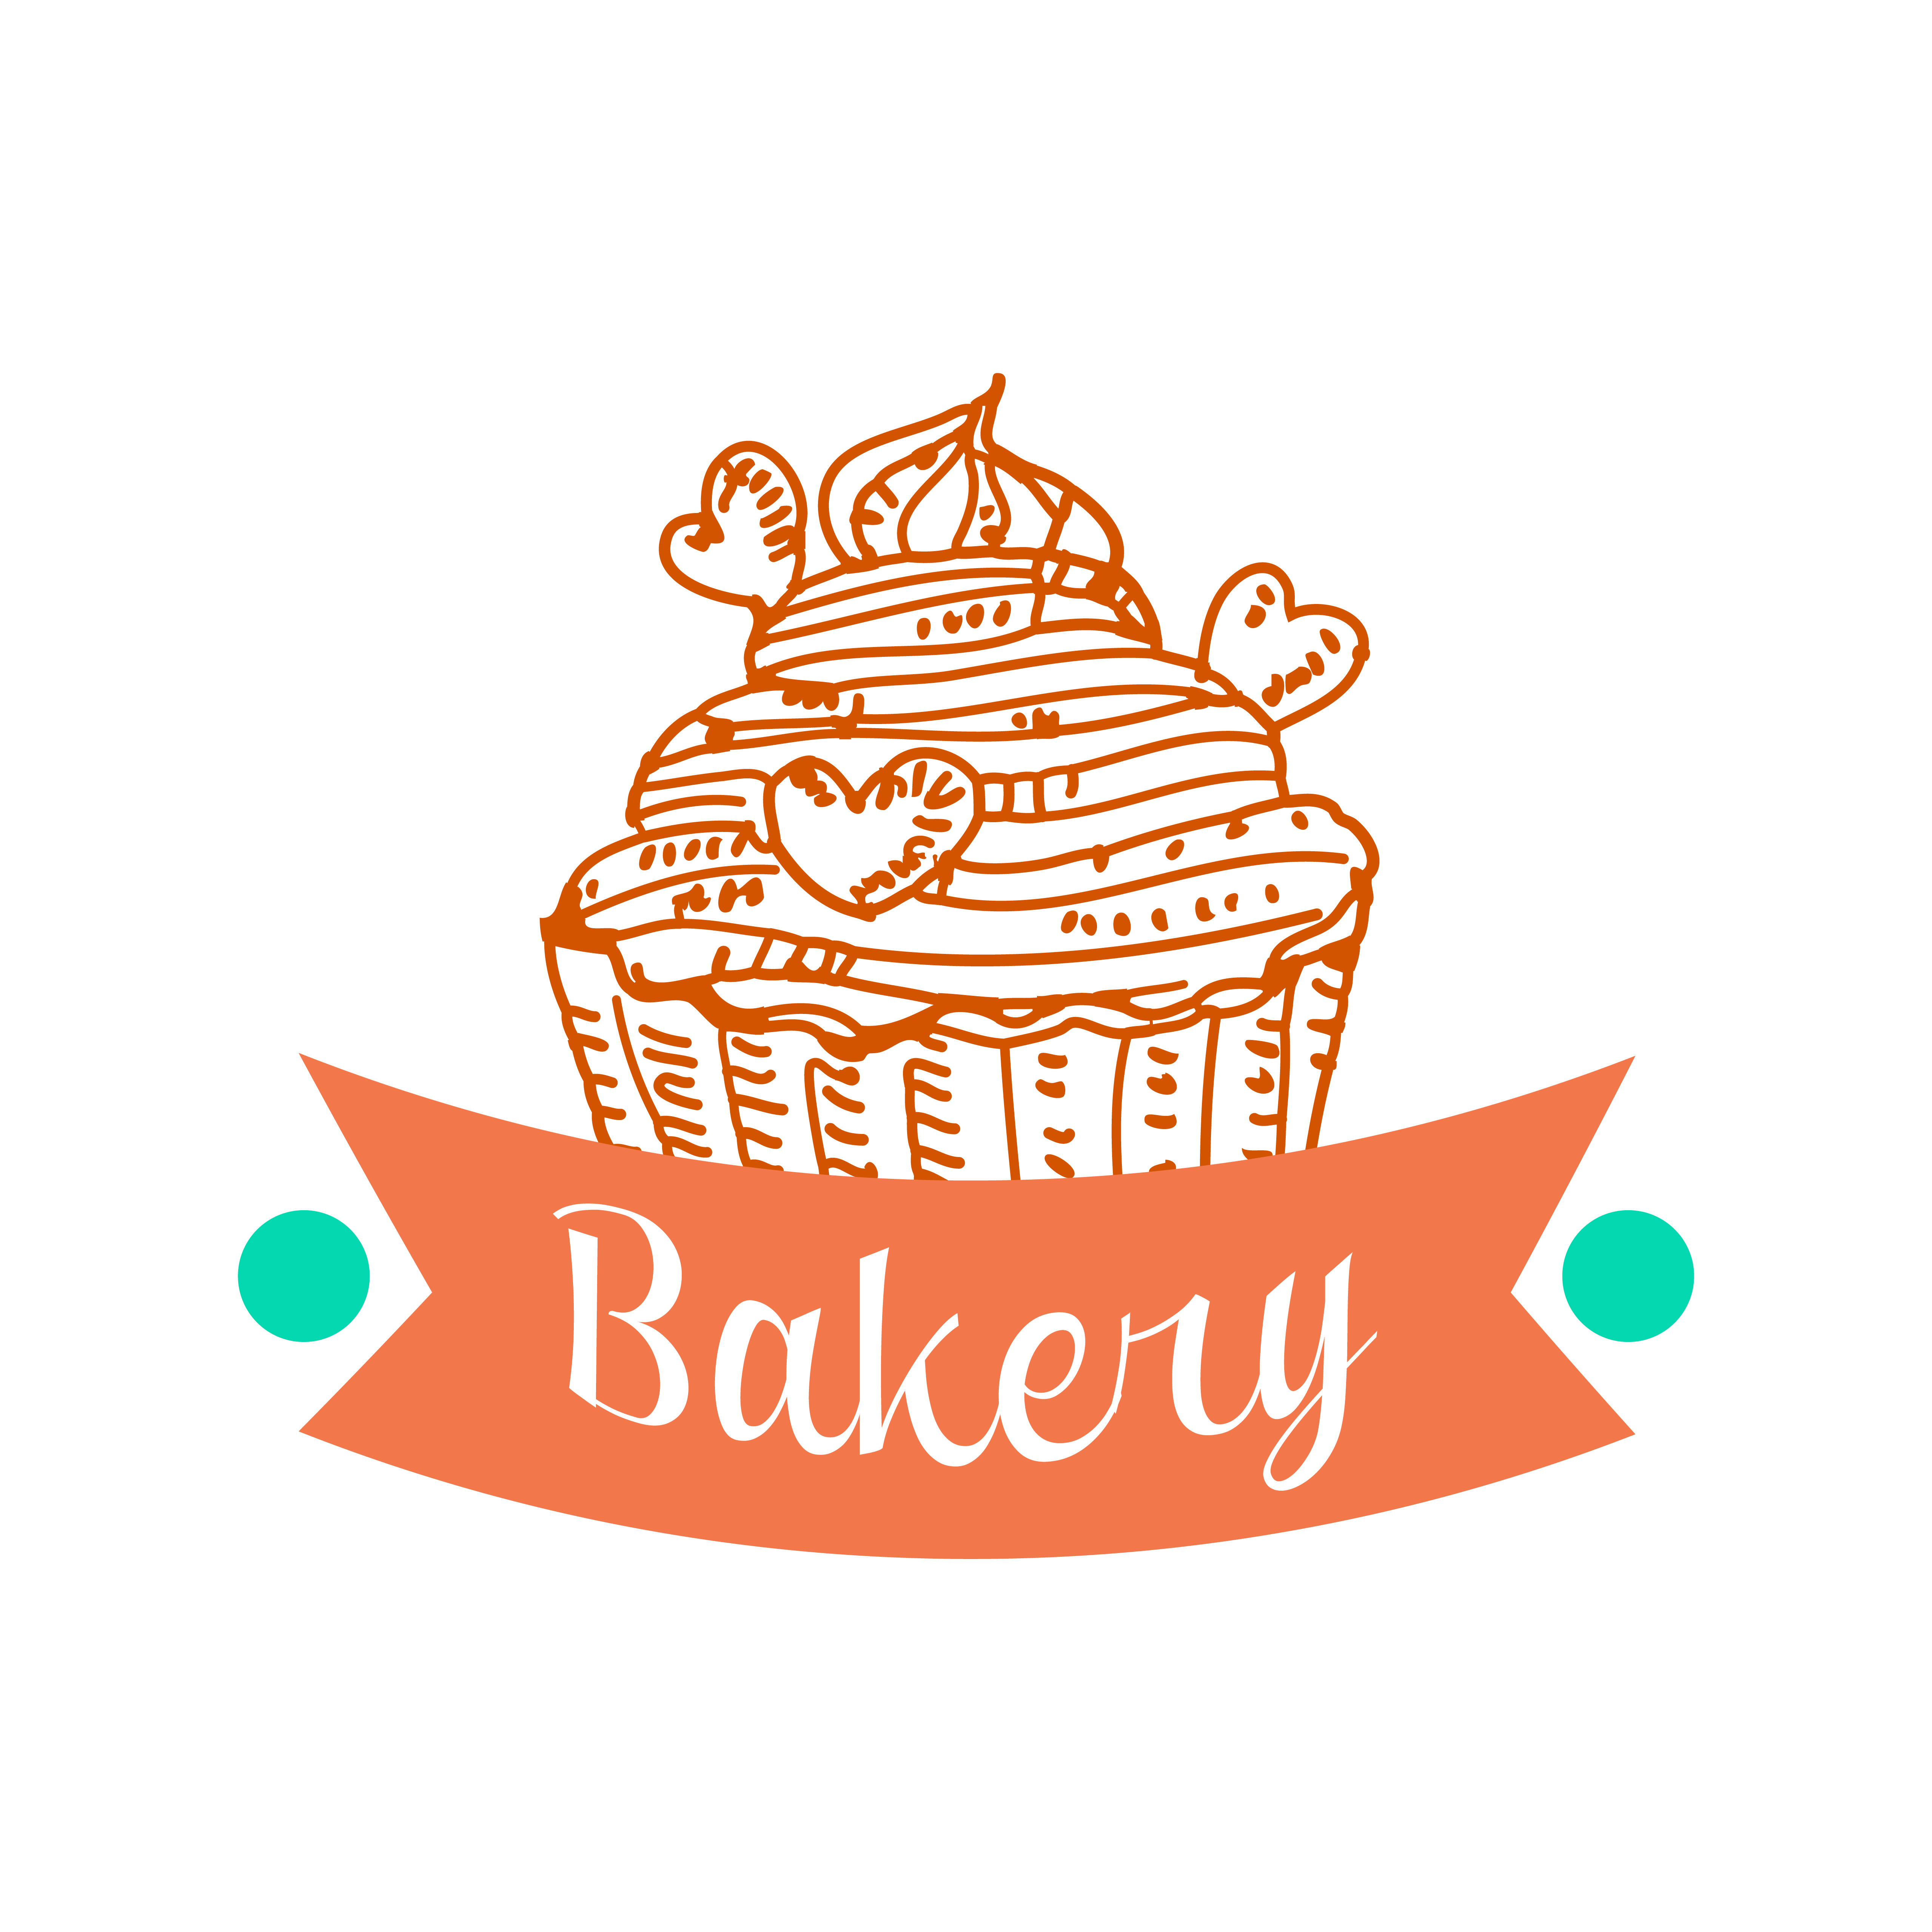 Bakery Logo Design Vector Free Download At Getdrawing - vrogue.co